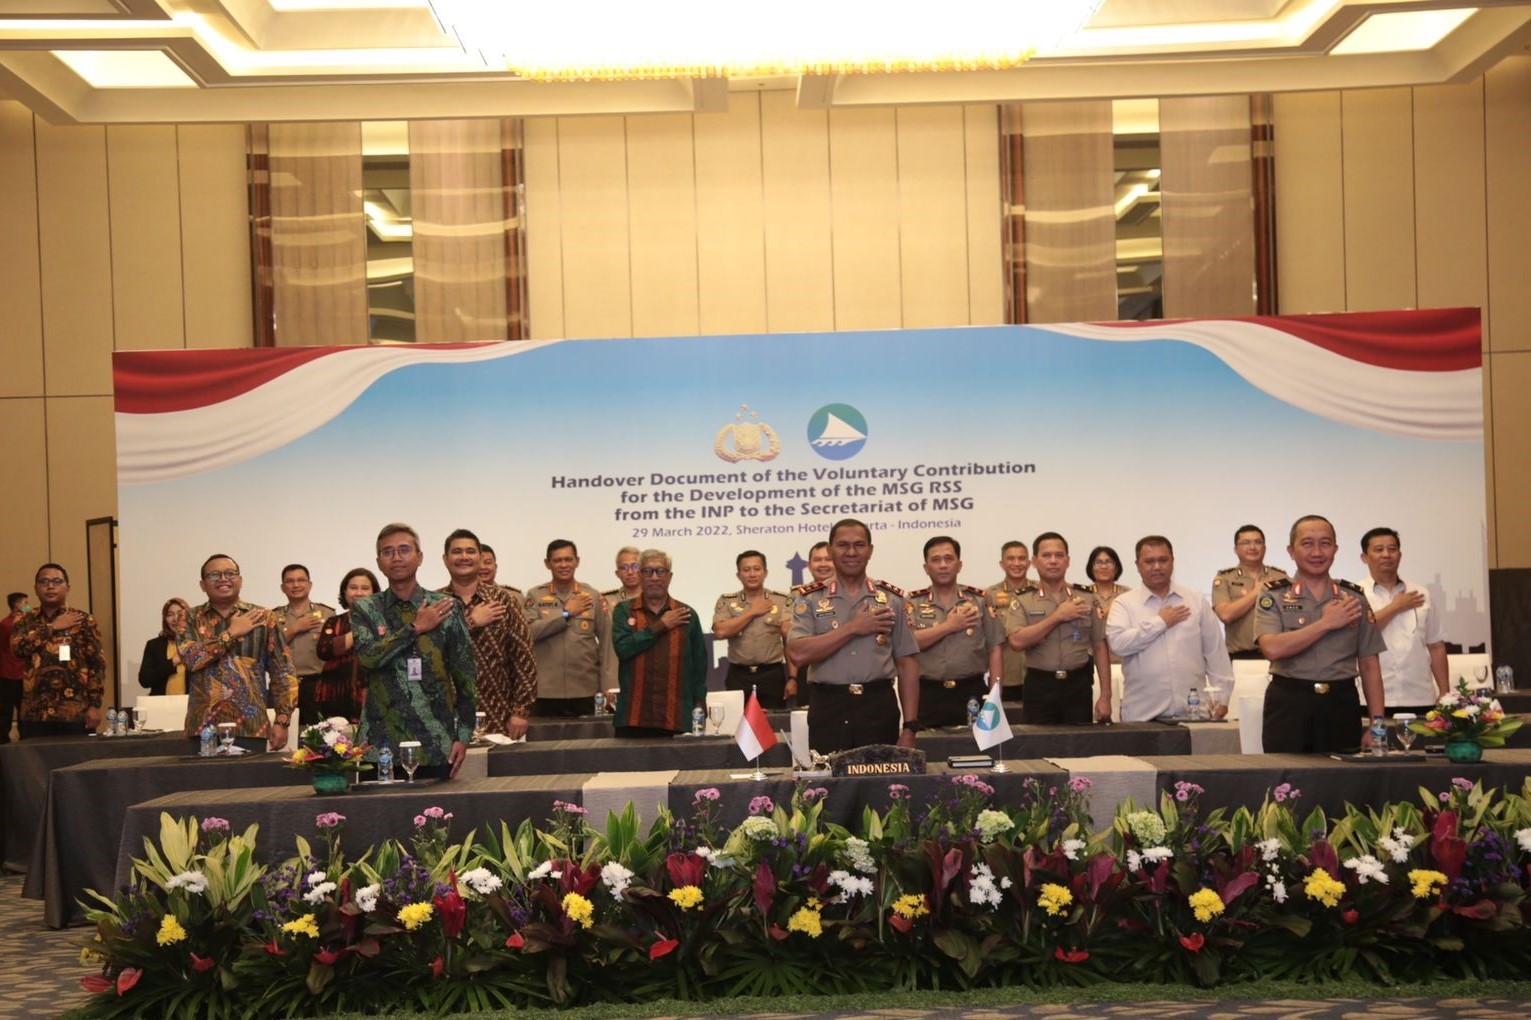 foto: foto: Foto bersama dalam kegiatan Handover Document of the Voluntary Contribution di Hotel Sheraton Grand Jakarta